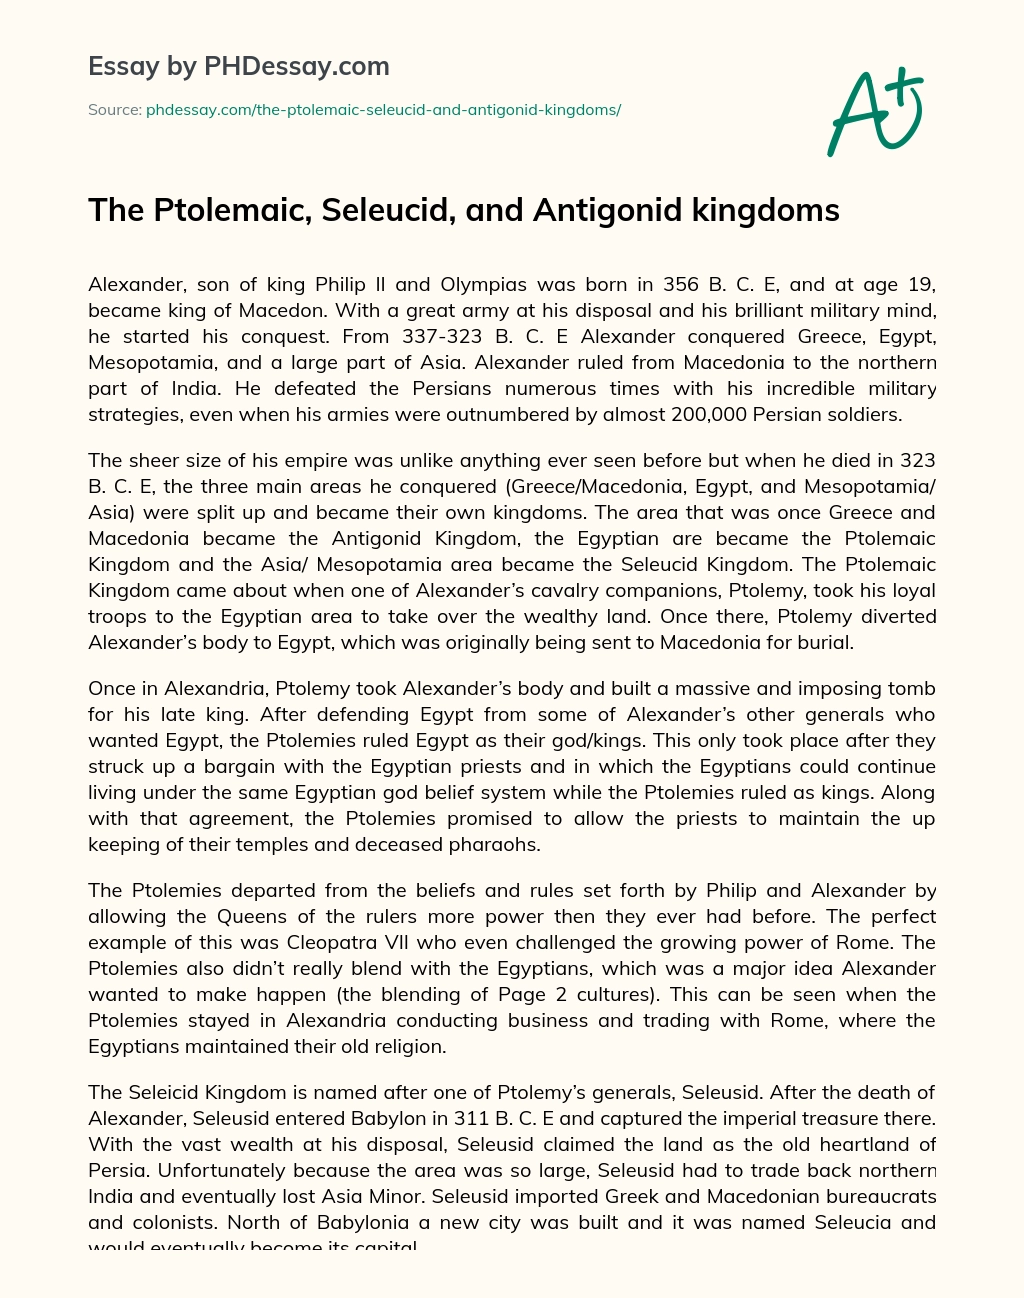 The Ptolemaic, Seleucid, and Antigonid kingdoms essay